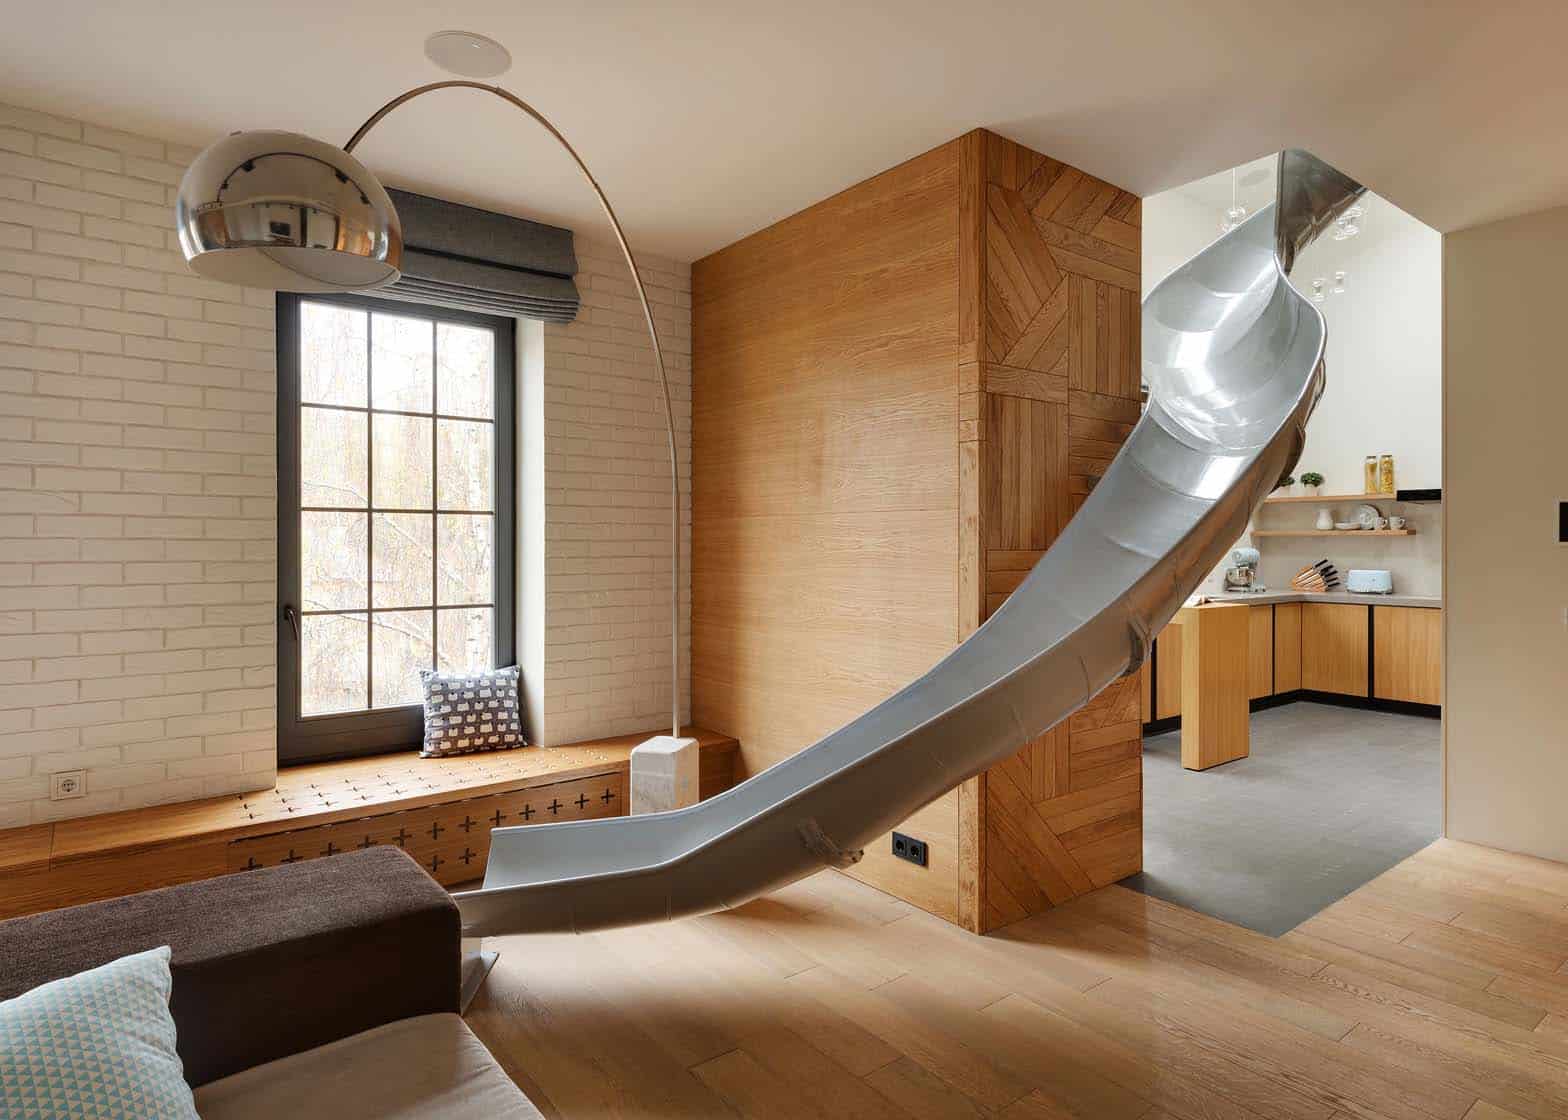 Apartment With Slide-KI Design-01-1 Kindesign